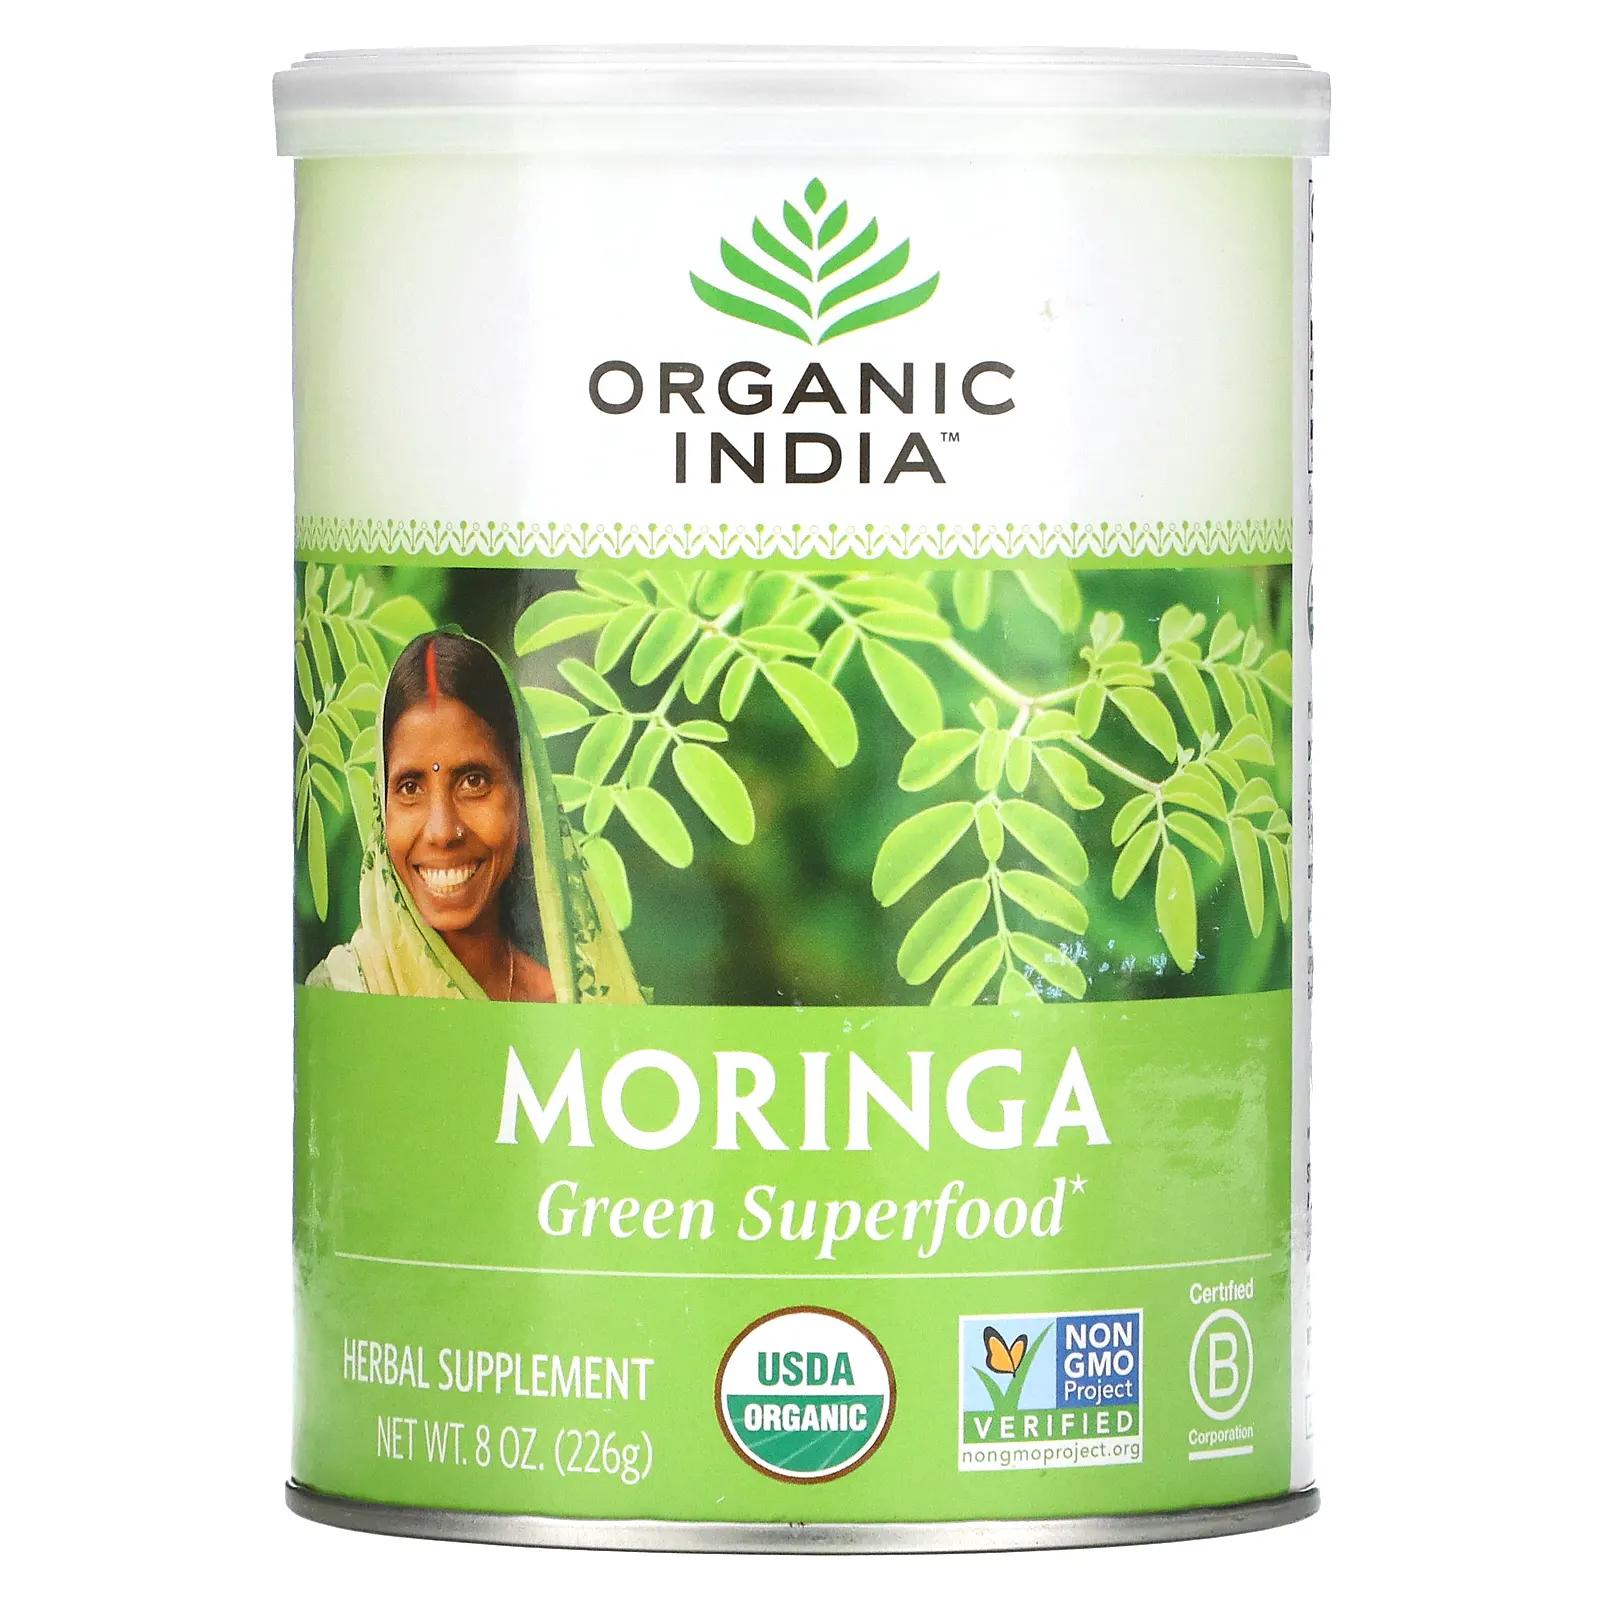 Organic India Порошок листов органической моринги 8 унц. (226 г) india